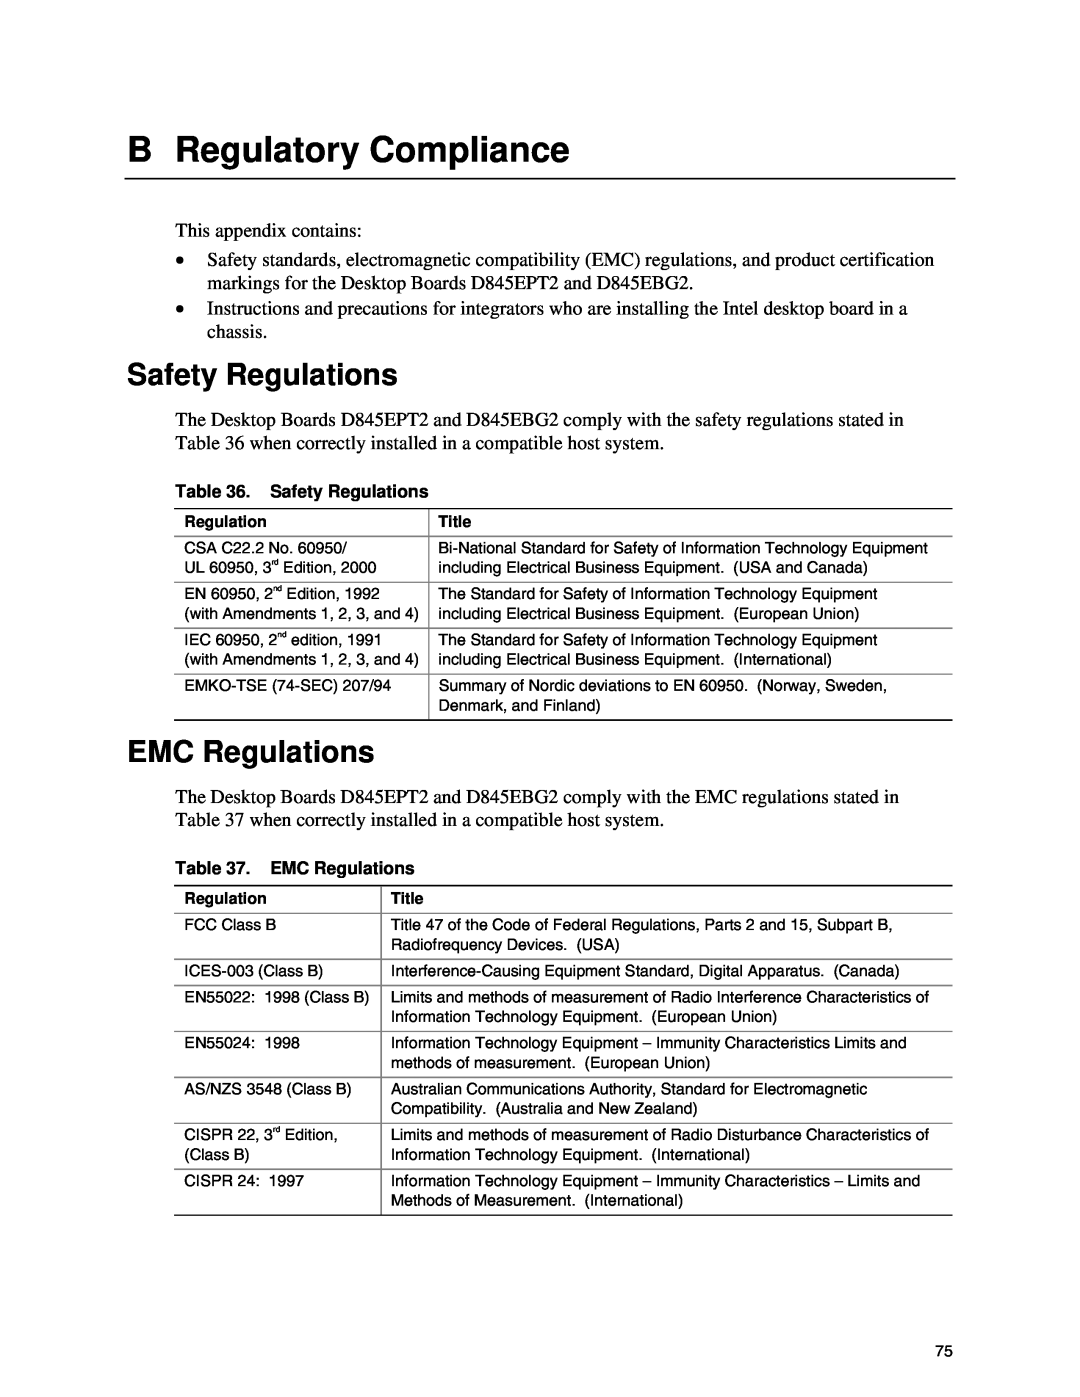 Intel D845EBG2, D845EPT2 manual B Regulatory Compliance, Safety Regulations, EMC Regulations 